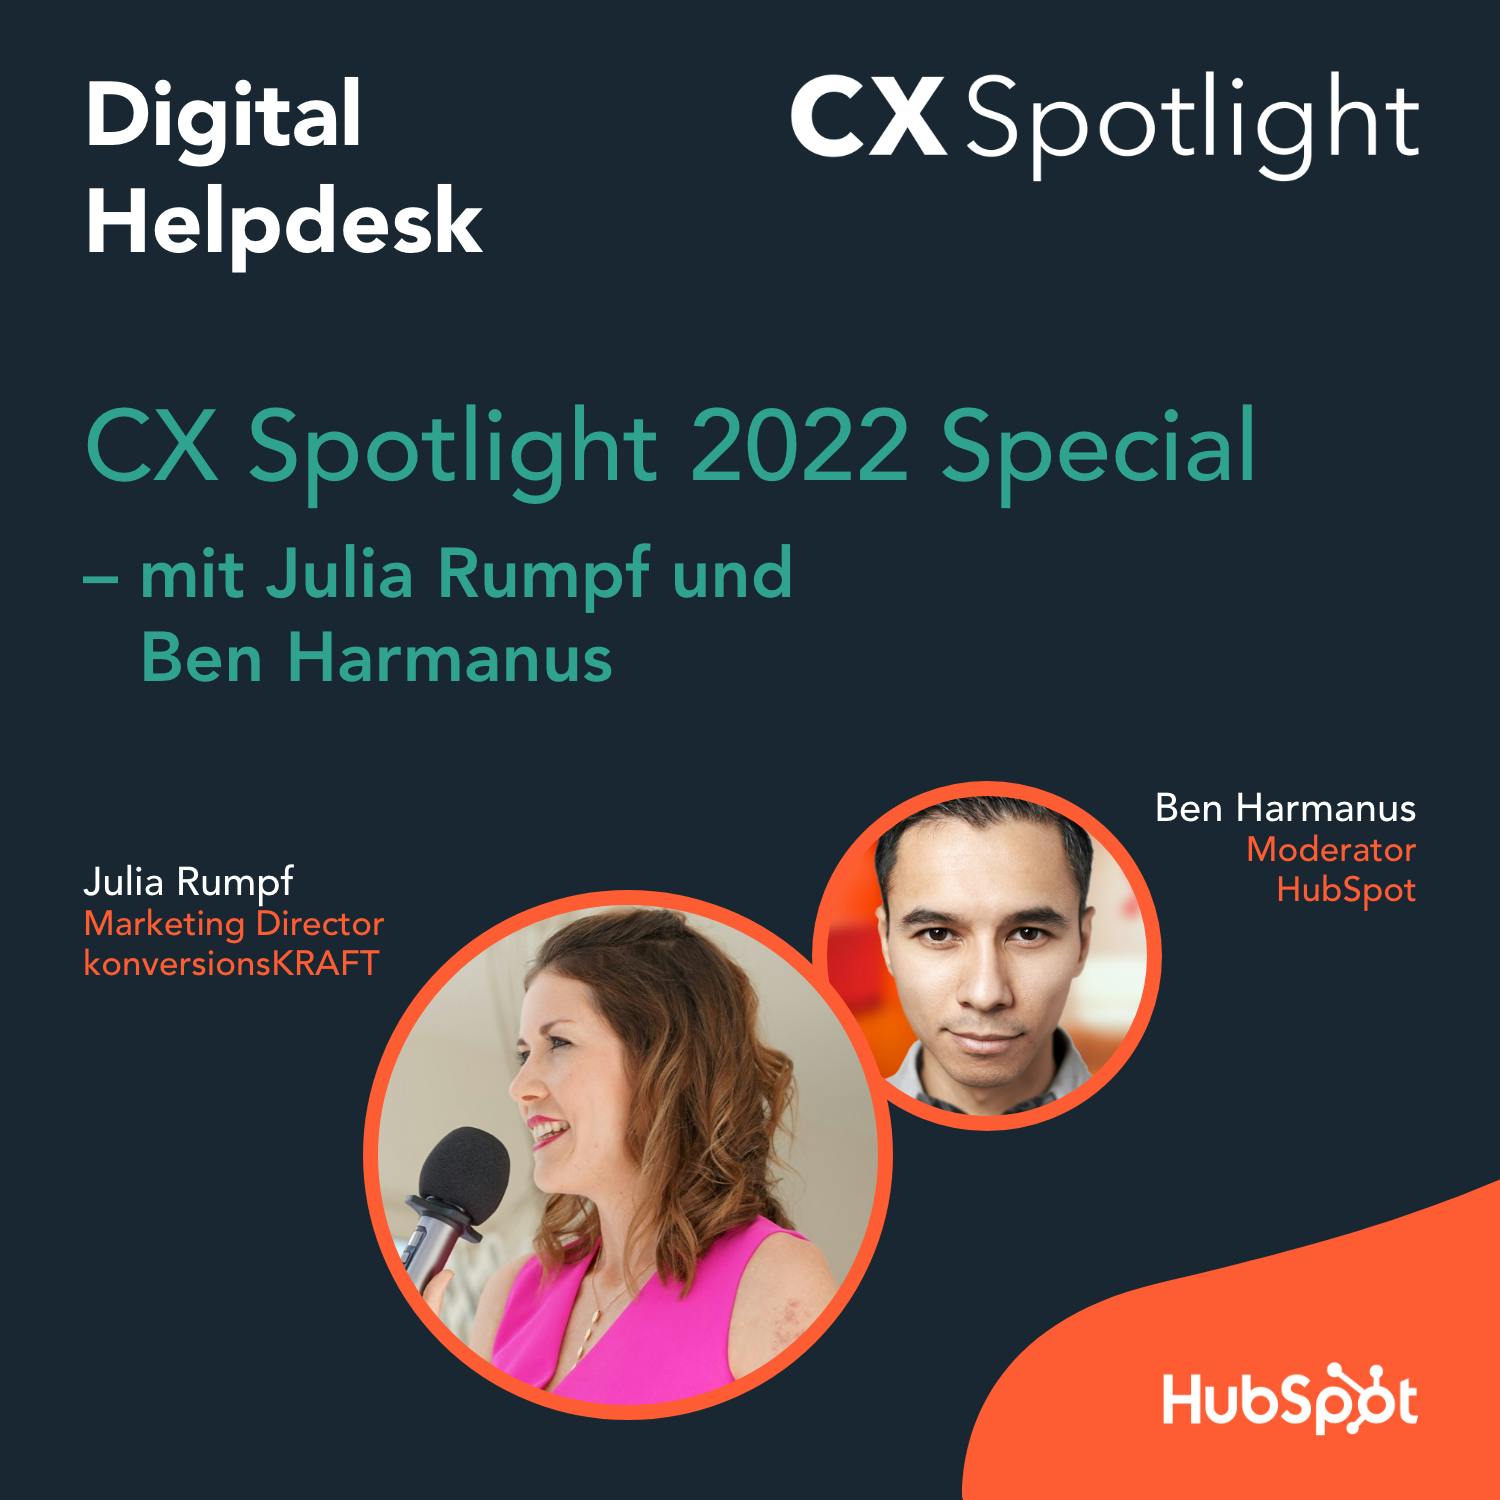 CX Spotlight 2022 Special mit Julia Rumpf und Ben Harmanus